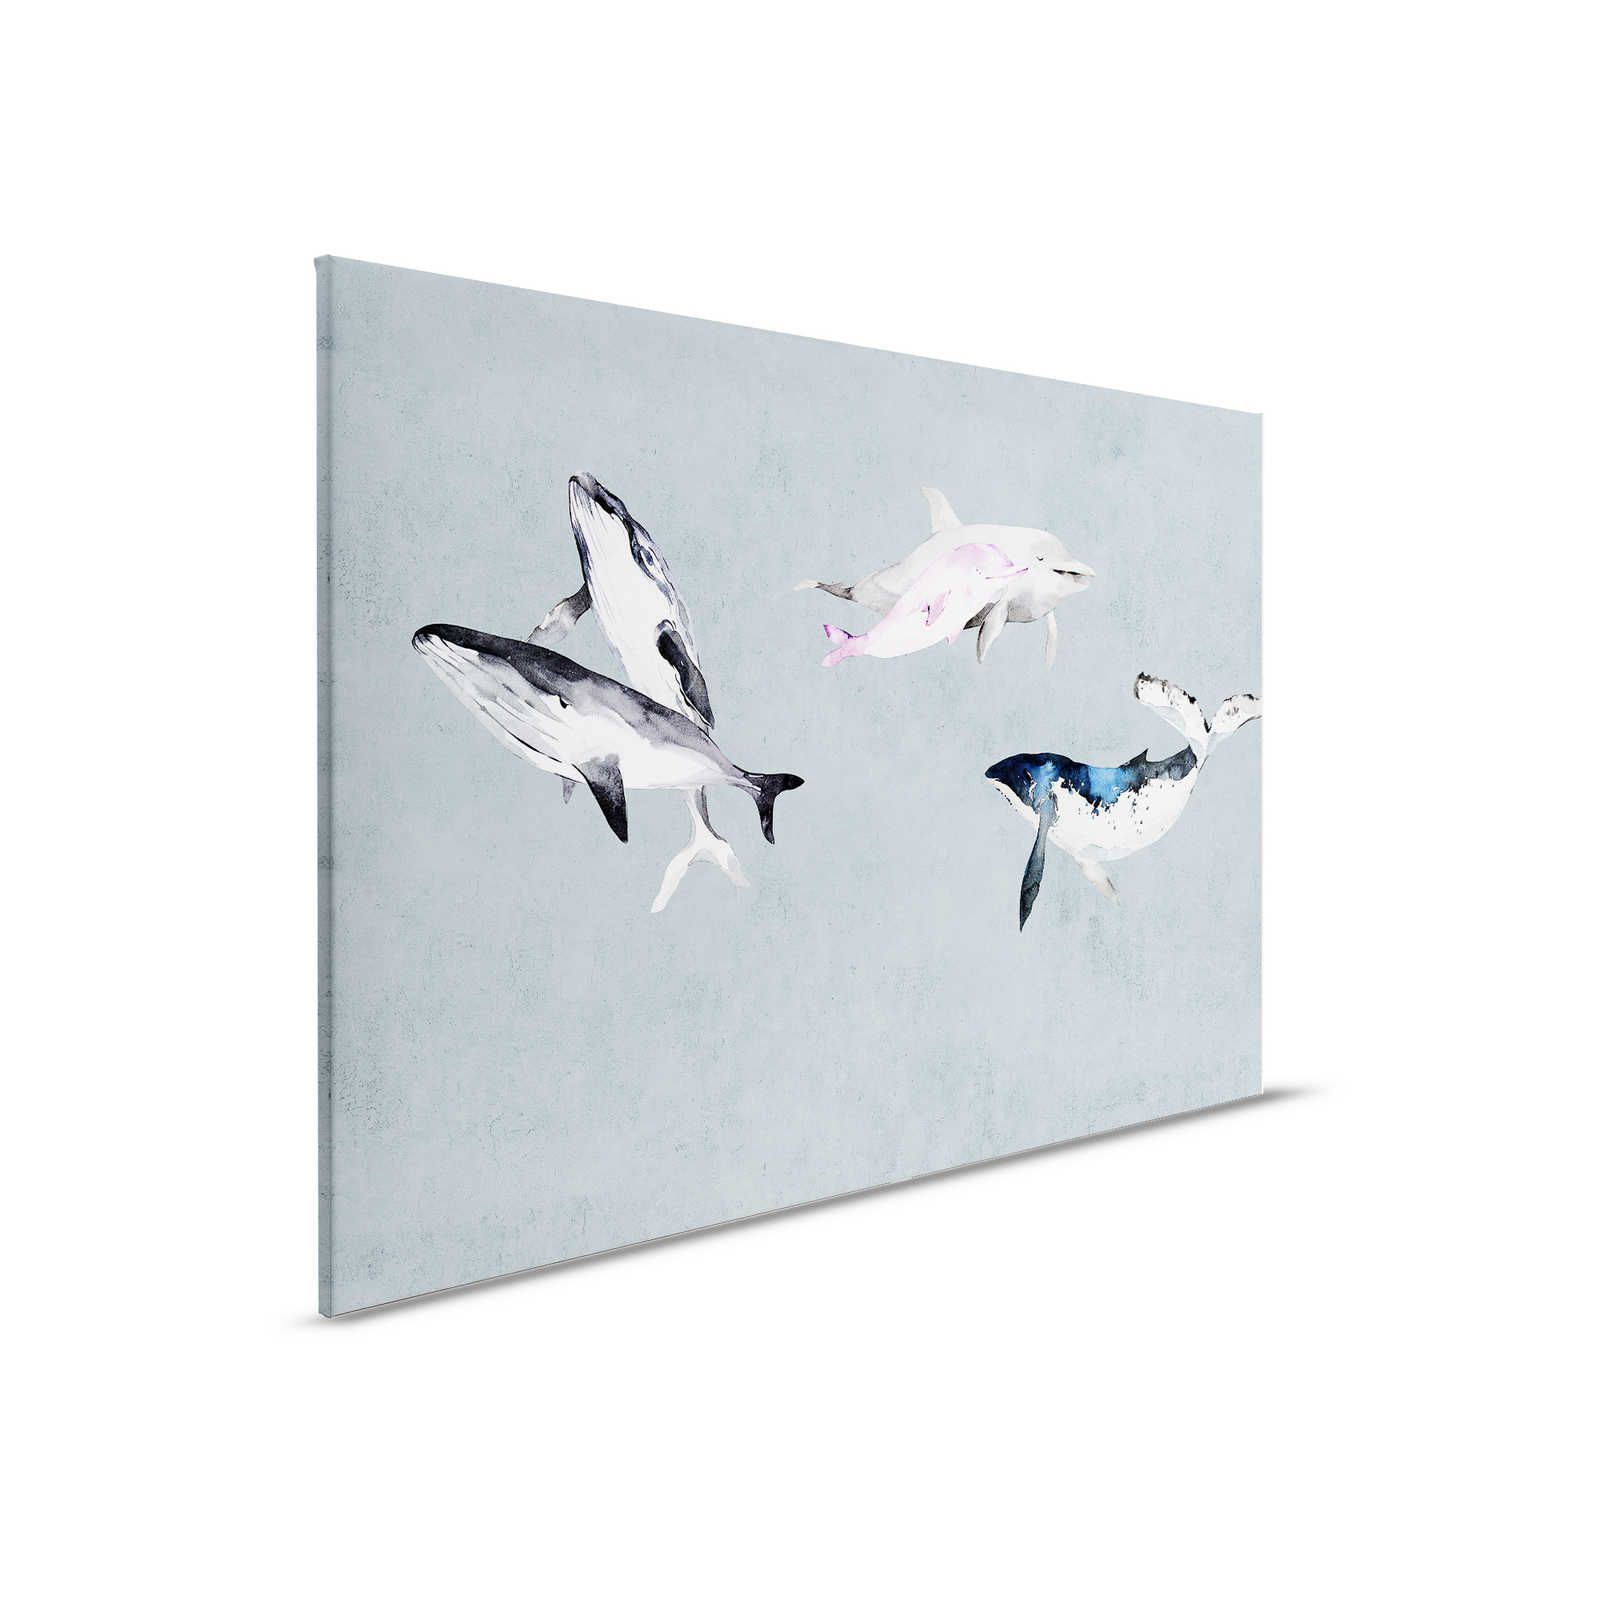 Oceans Five 1 - Toile Baleines & Dauphins style aquarelle - 0,90 m x 0,60 m
